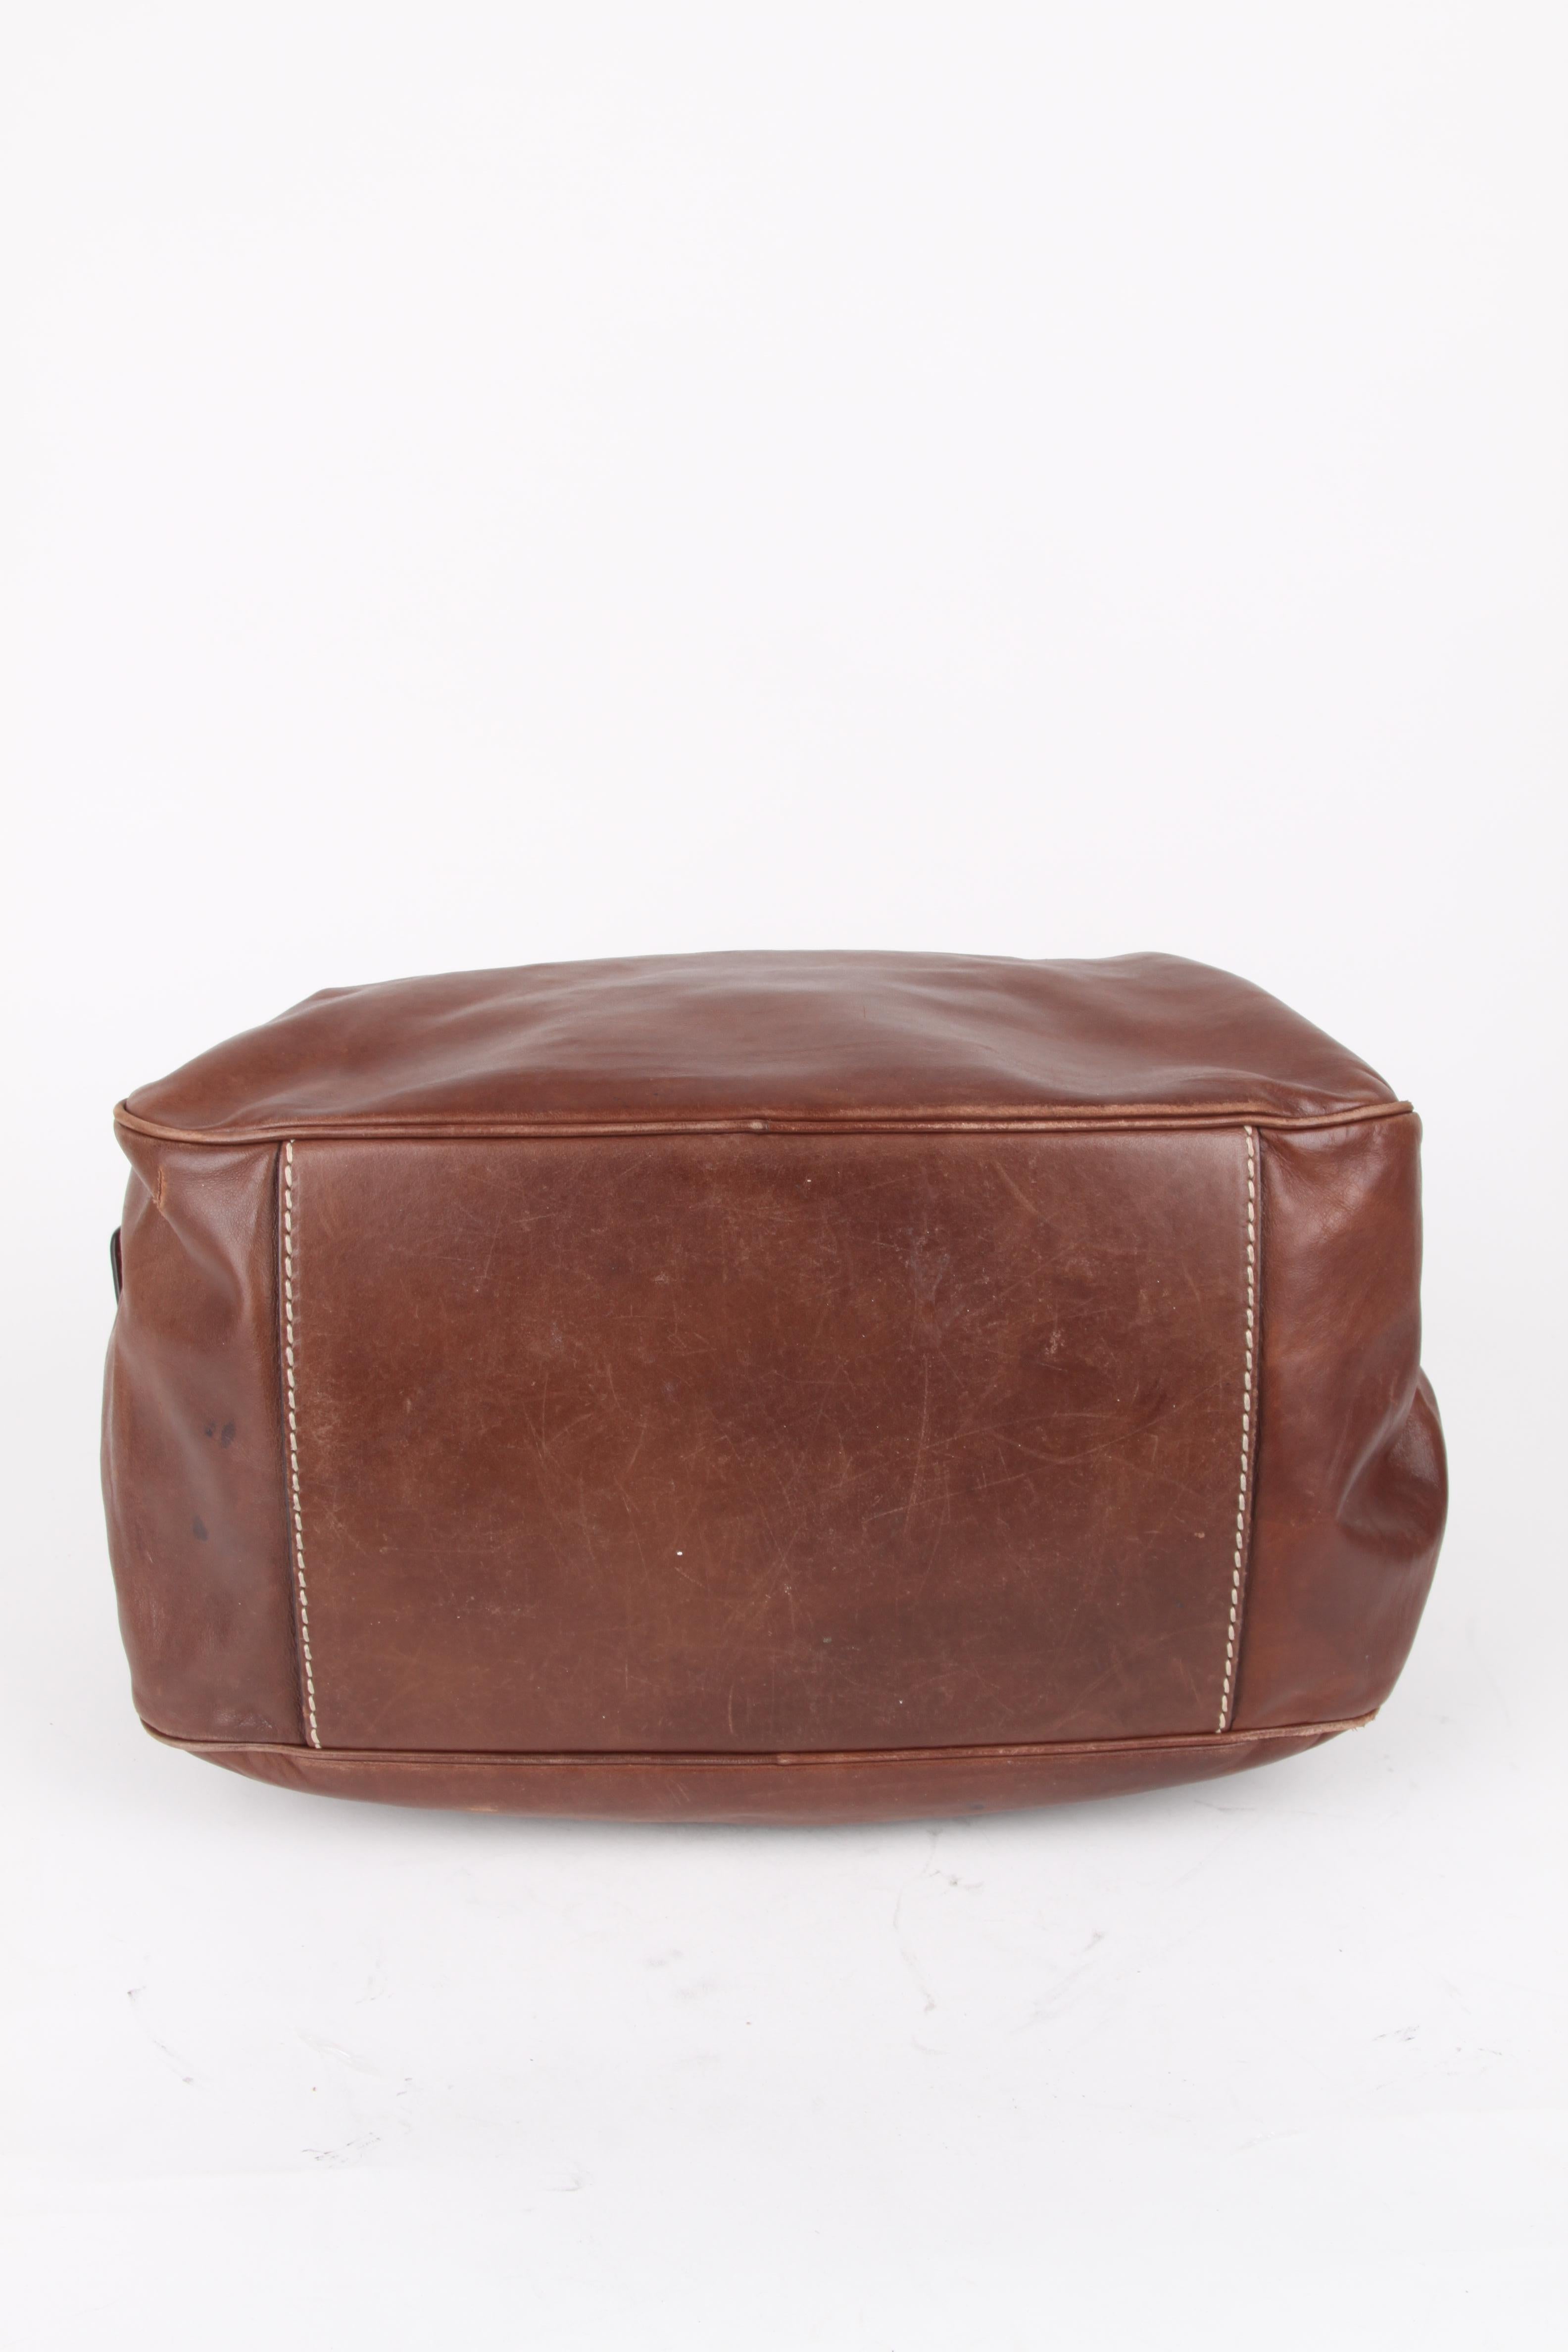 Dolce and Gabbana Brown Leather Tassle Chain Handbag For Sale 4